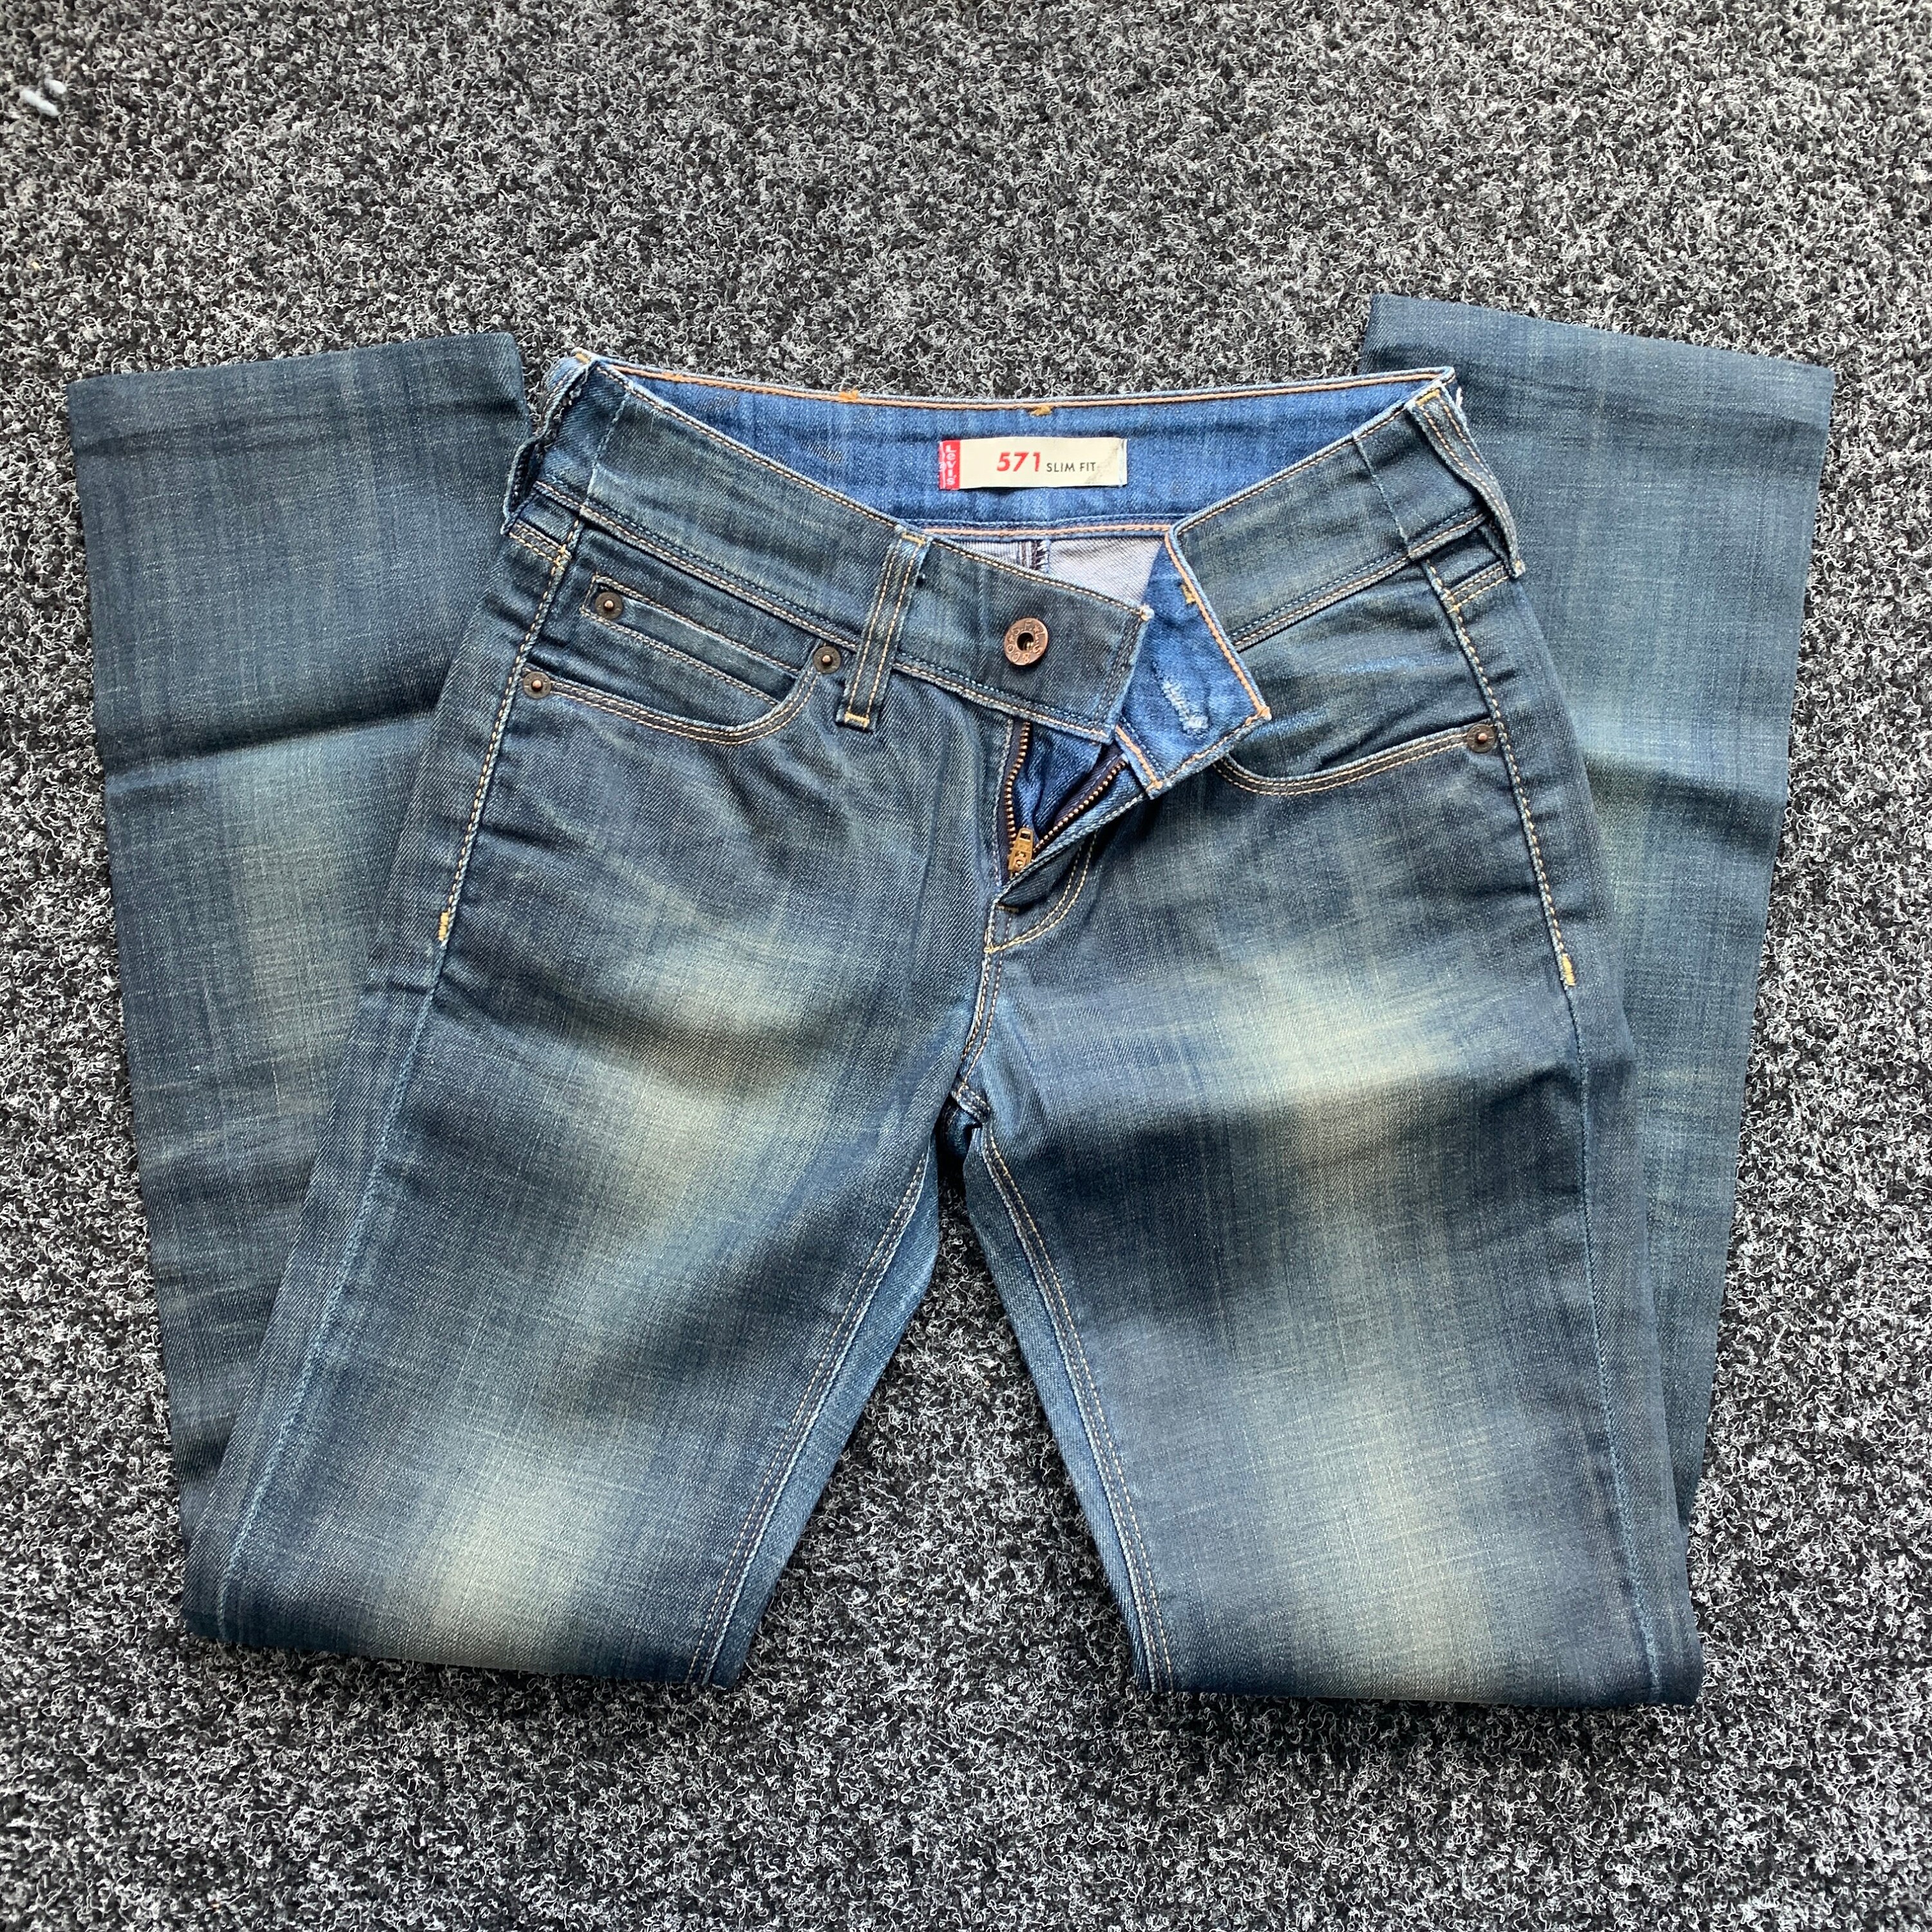 LEVI'S Vintage Denim Jeans. Model 571 Slim Fit Denim Jeans - Etsy